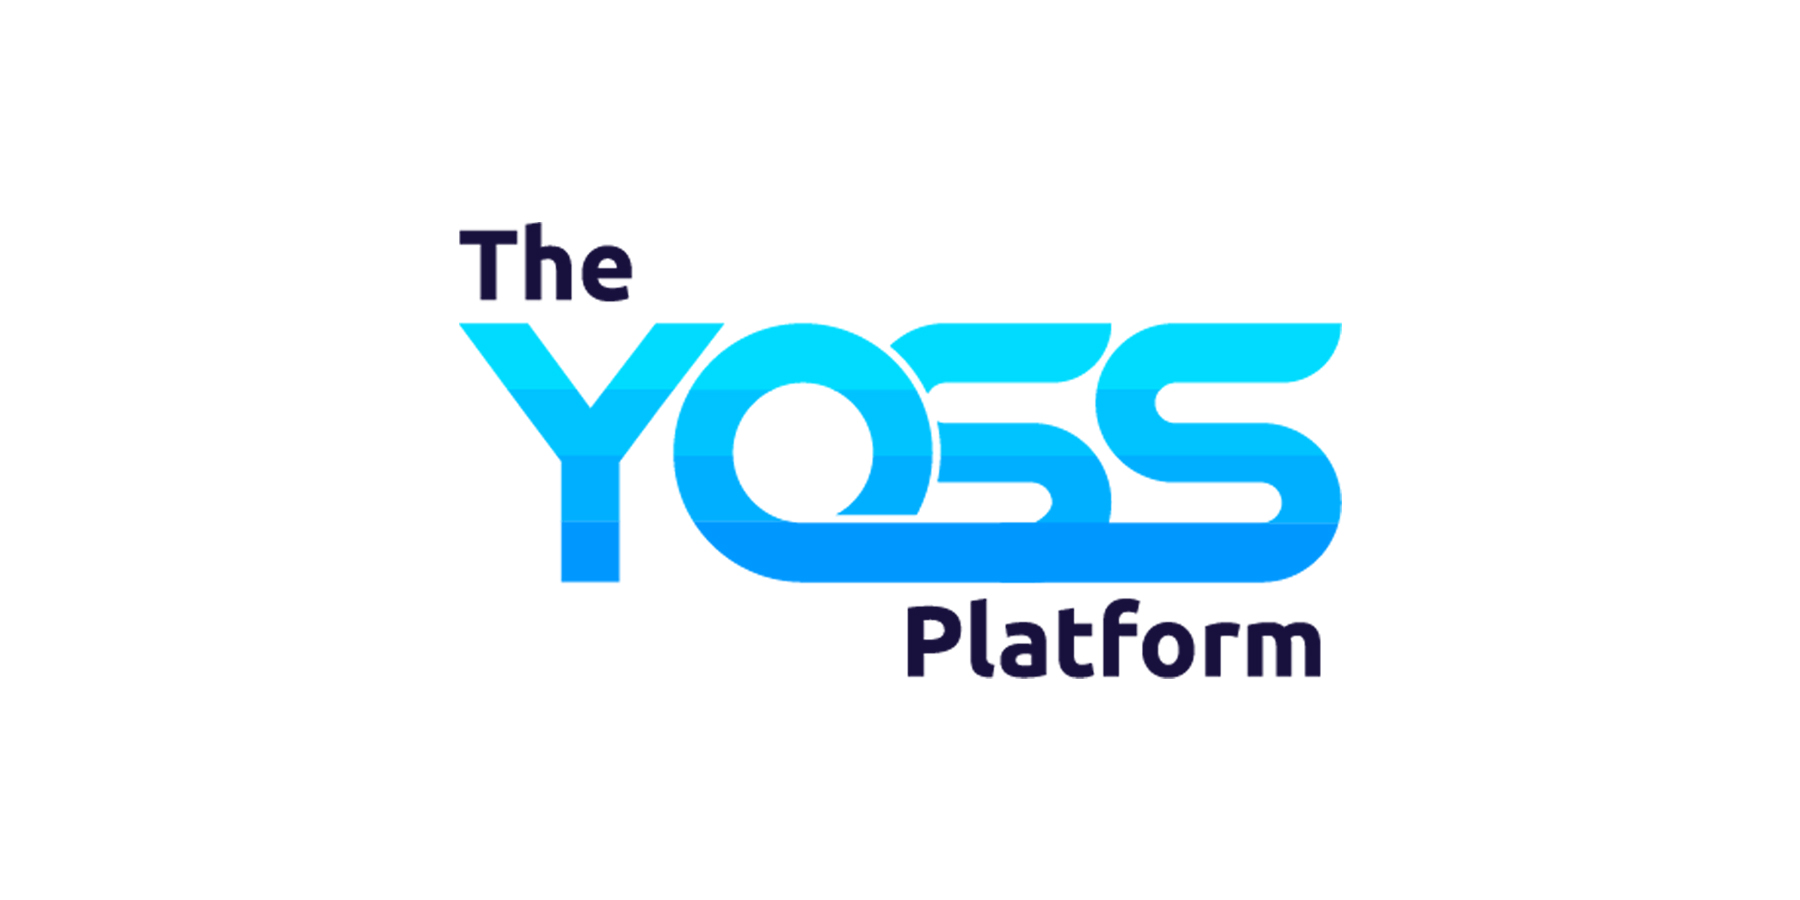 The YOSS Platform